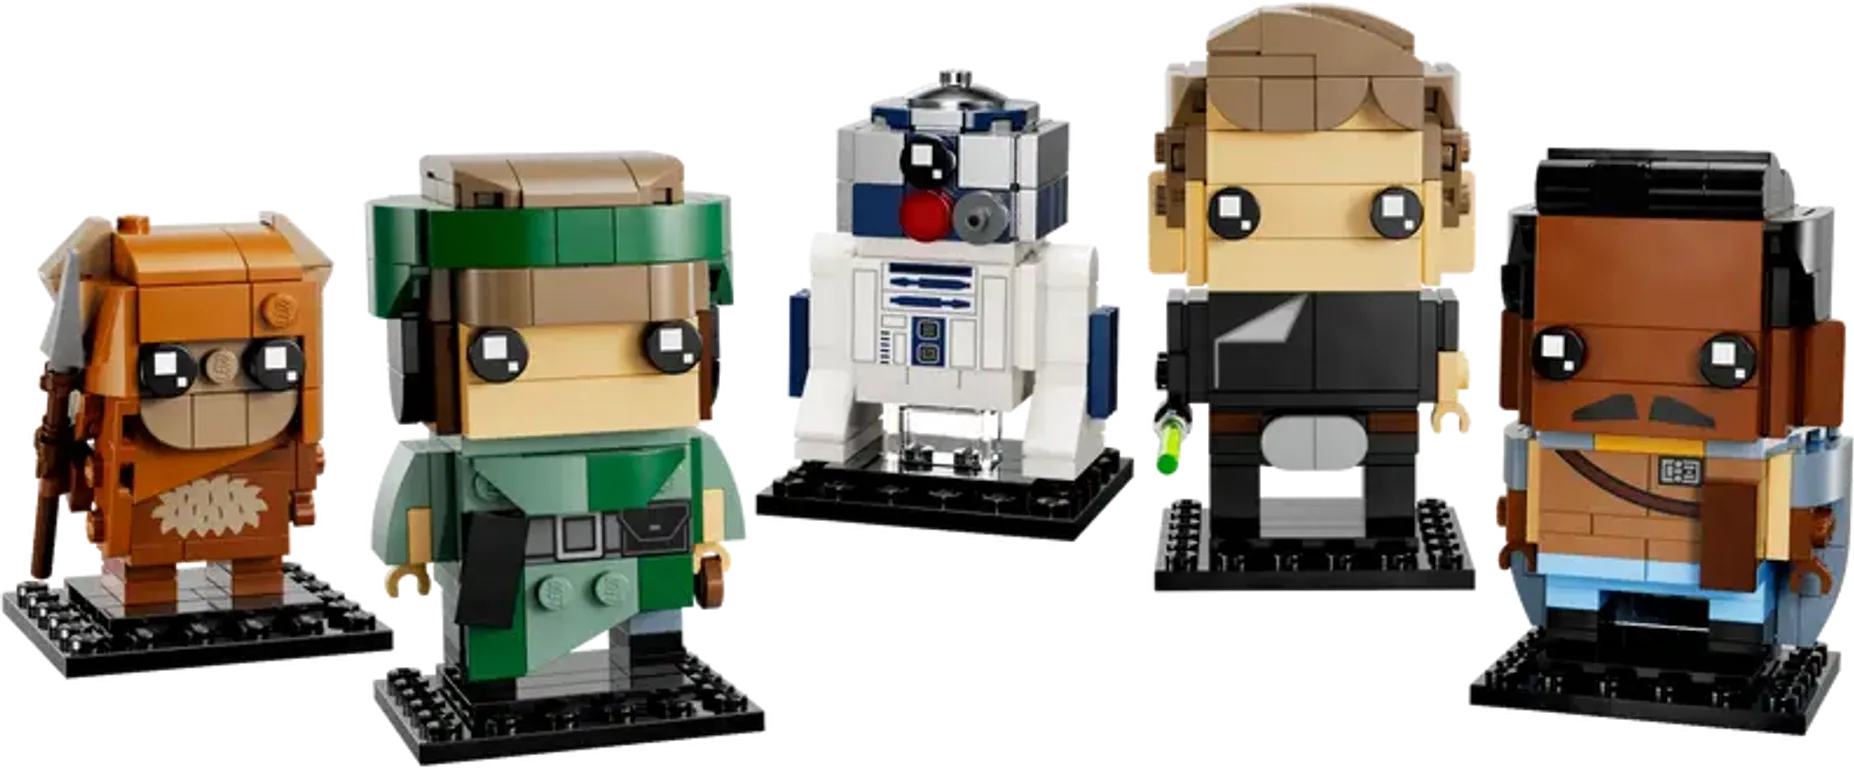 LEGO® Star Wars Battle of Endor™ Heroes components